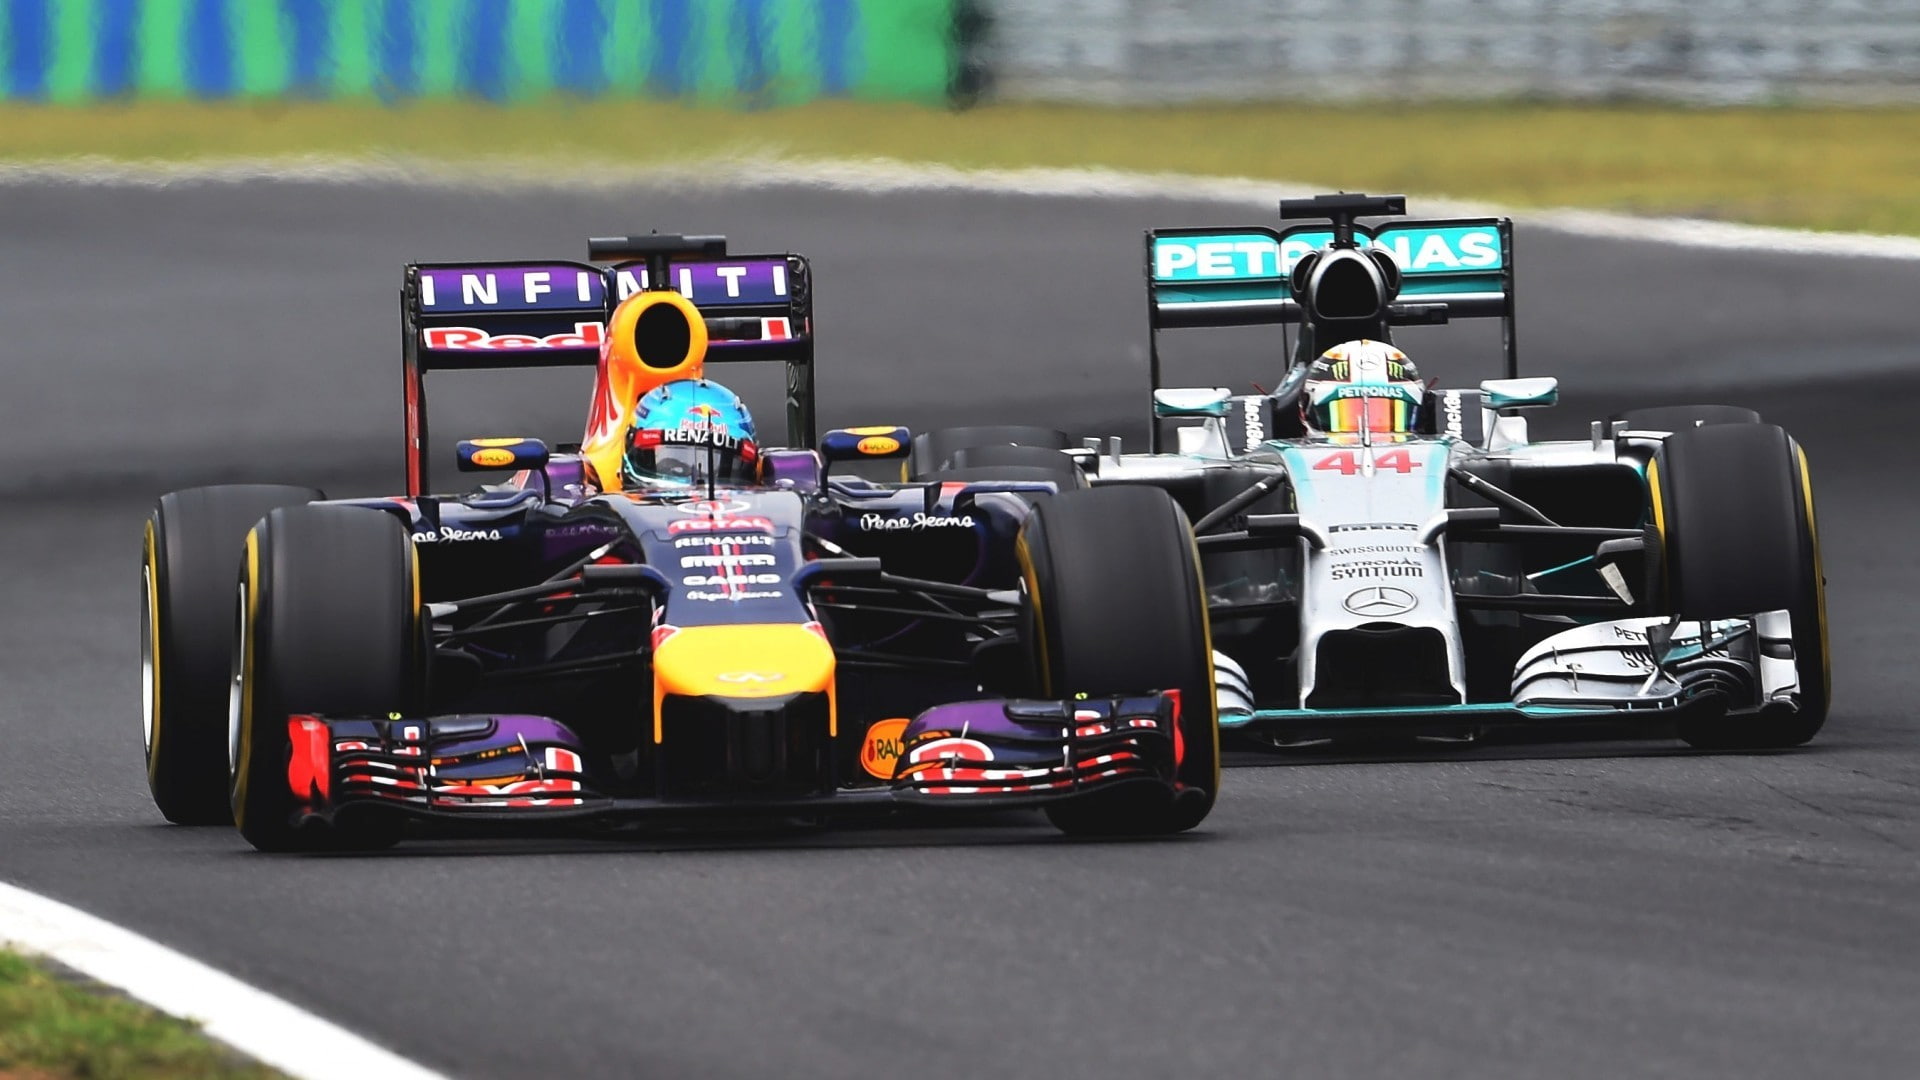 Formula 1, motorsports, Sebastian Vettel, Lewis Hamilton, Red Bull Racing